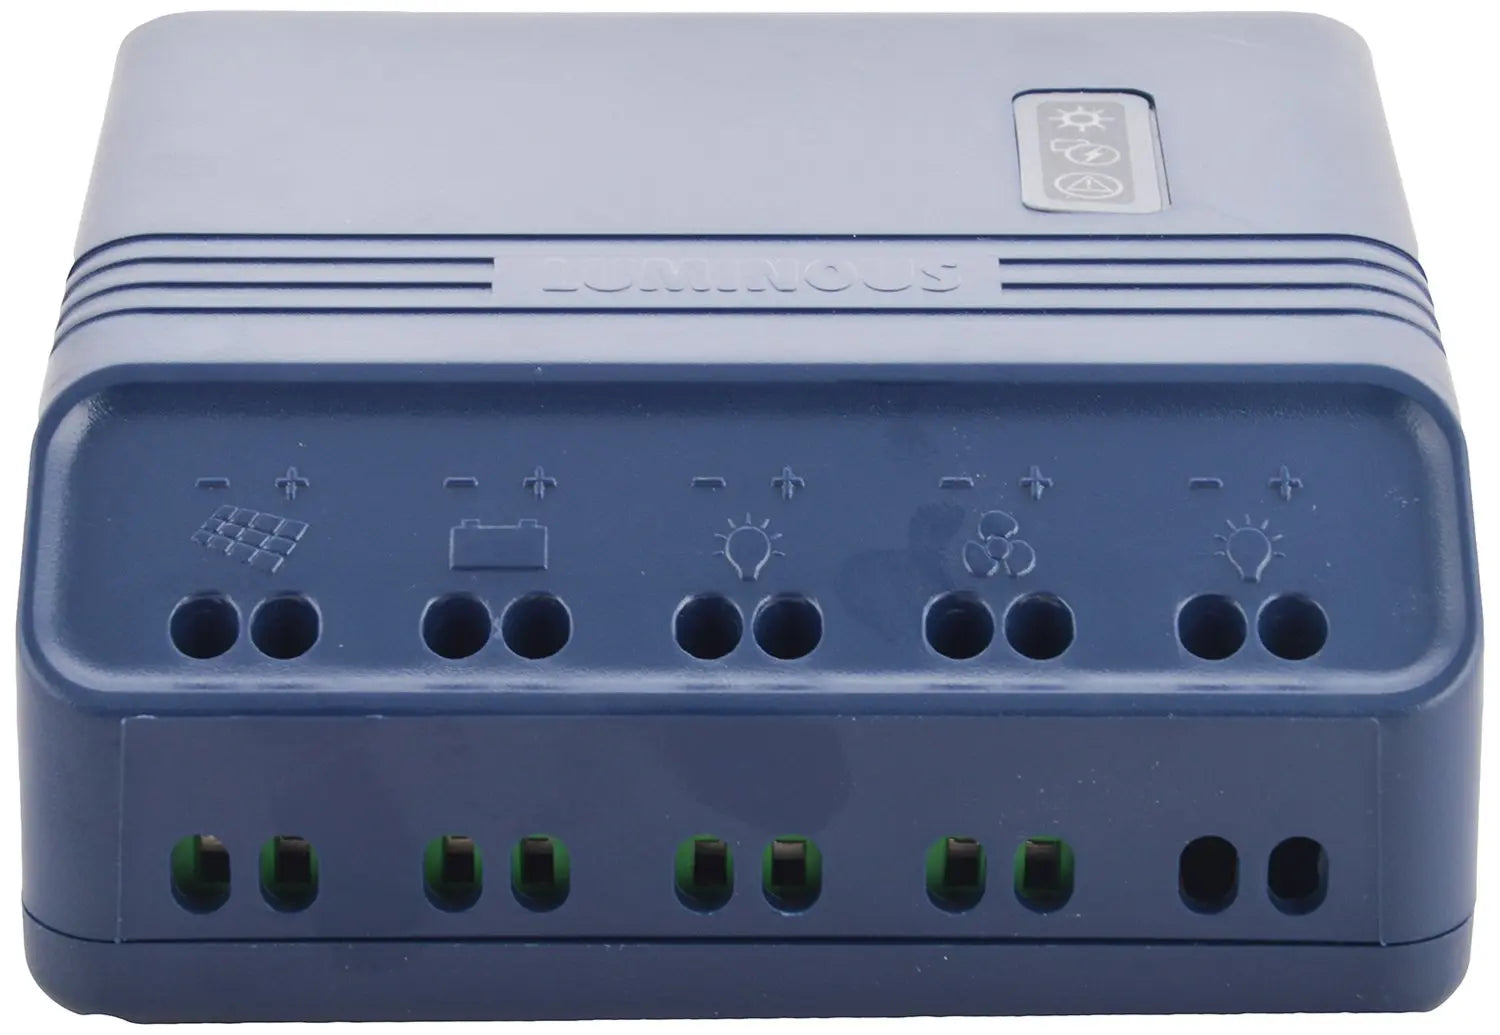 Luminous Solar Charge Controller 6 Amp - Blue, SCC1206 with USB port - Apollo Universe